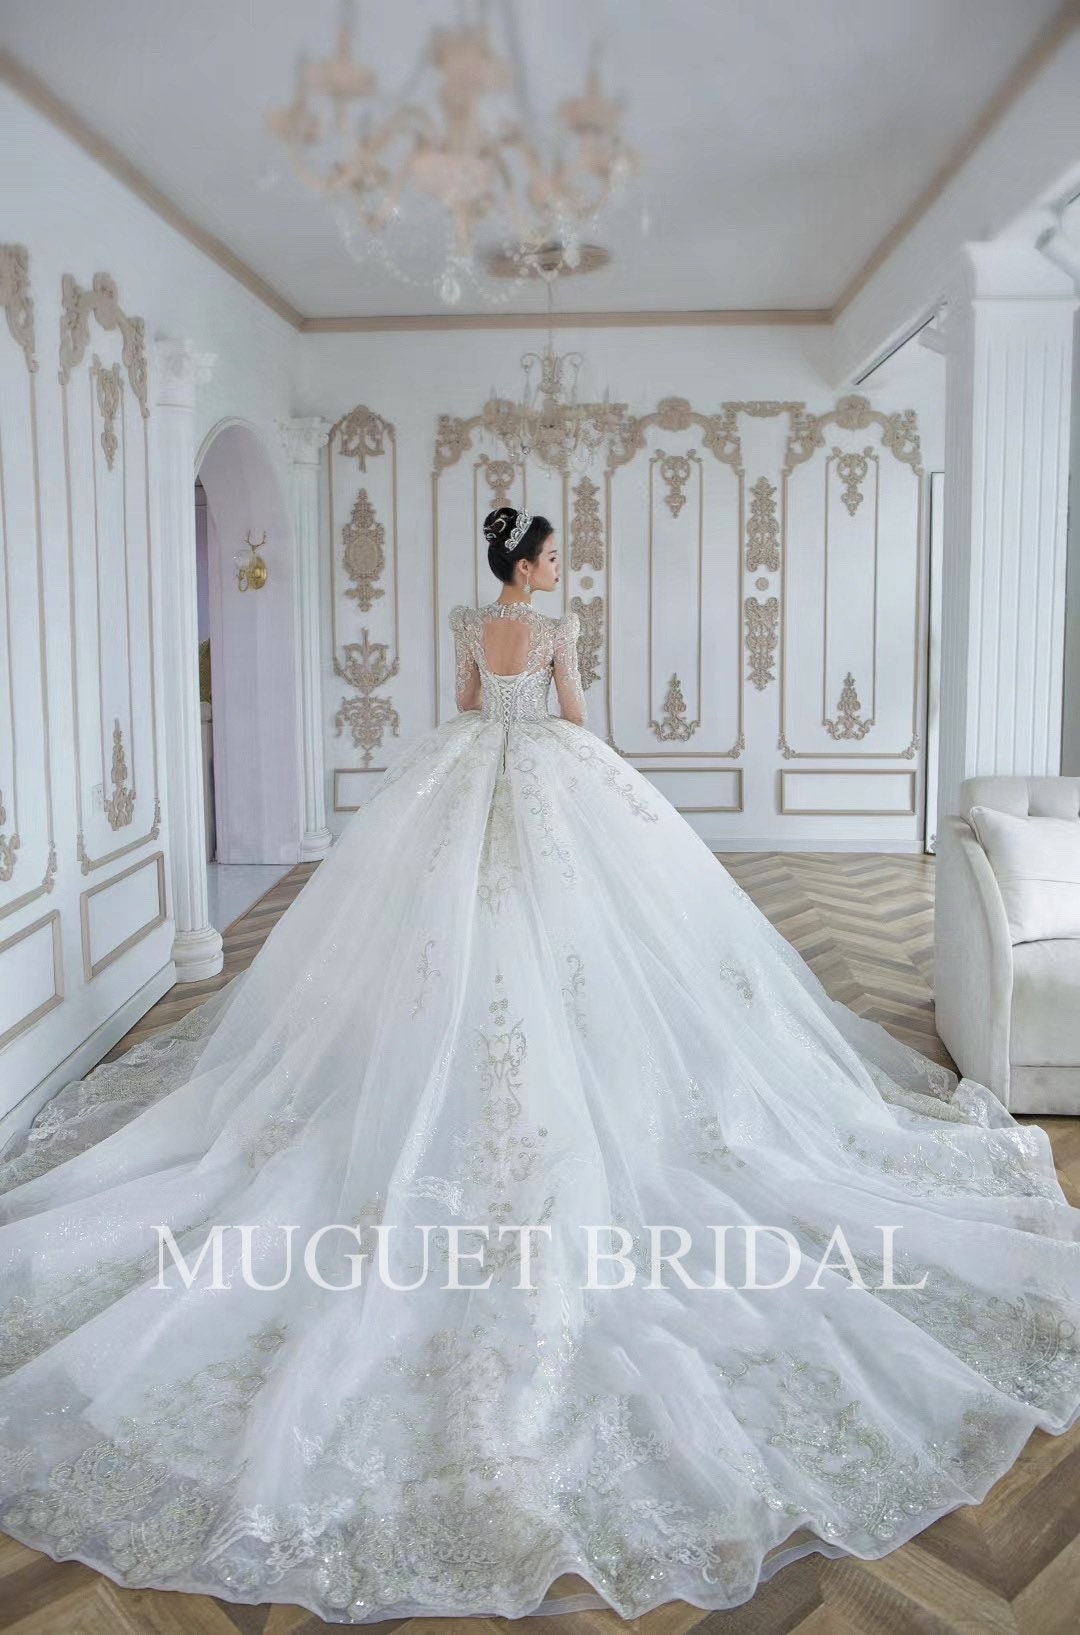 Crystal Design 2017 Wedding Dresses  Haute Couture Bridal Collection   Wedding Inspirasi  Wedding dresses lace ballgown Wedding dresses taffeta Wedding  dresses